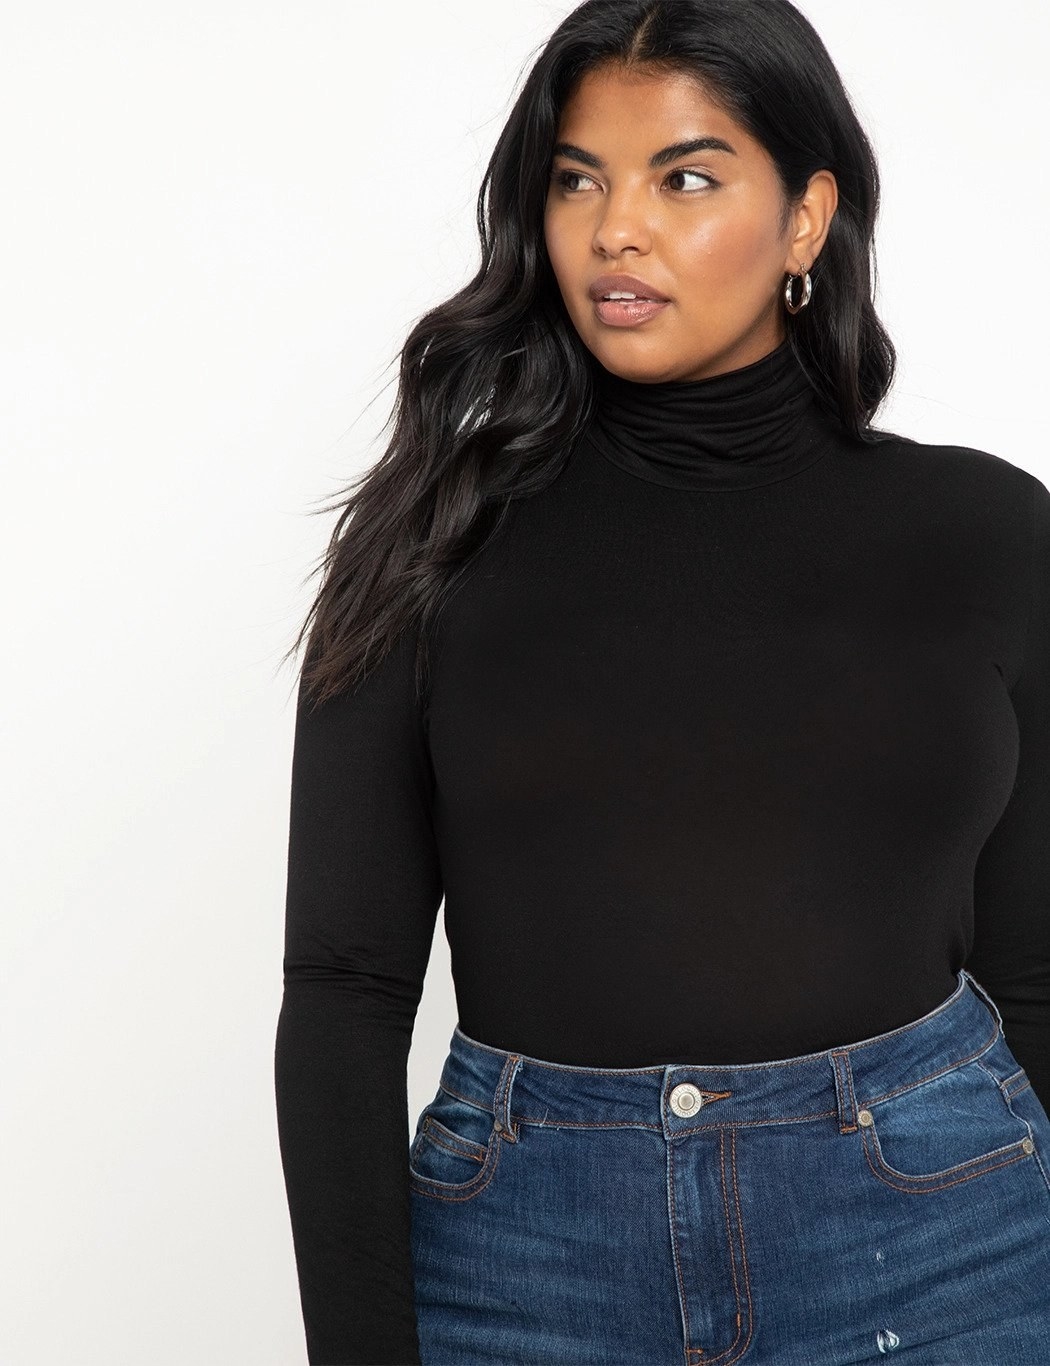 Model wearing black turtleneck top with jeans